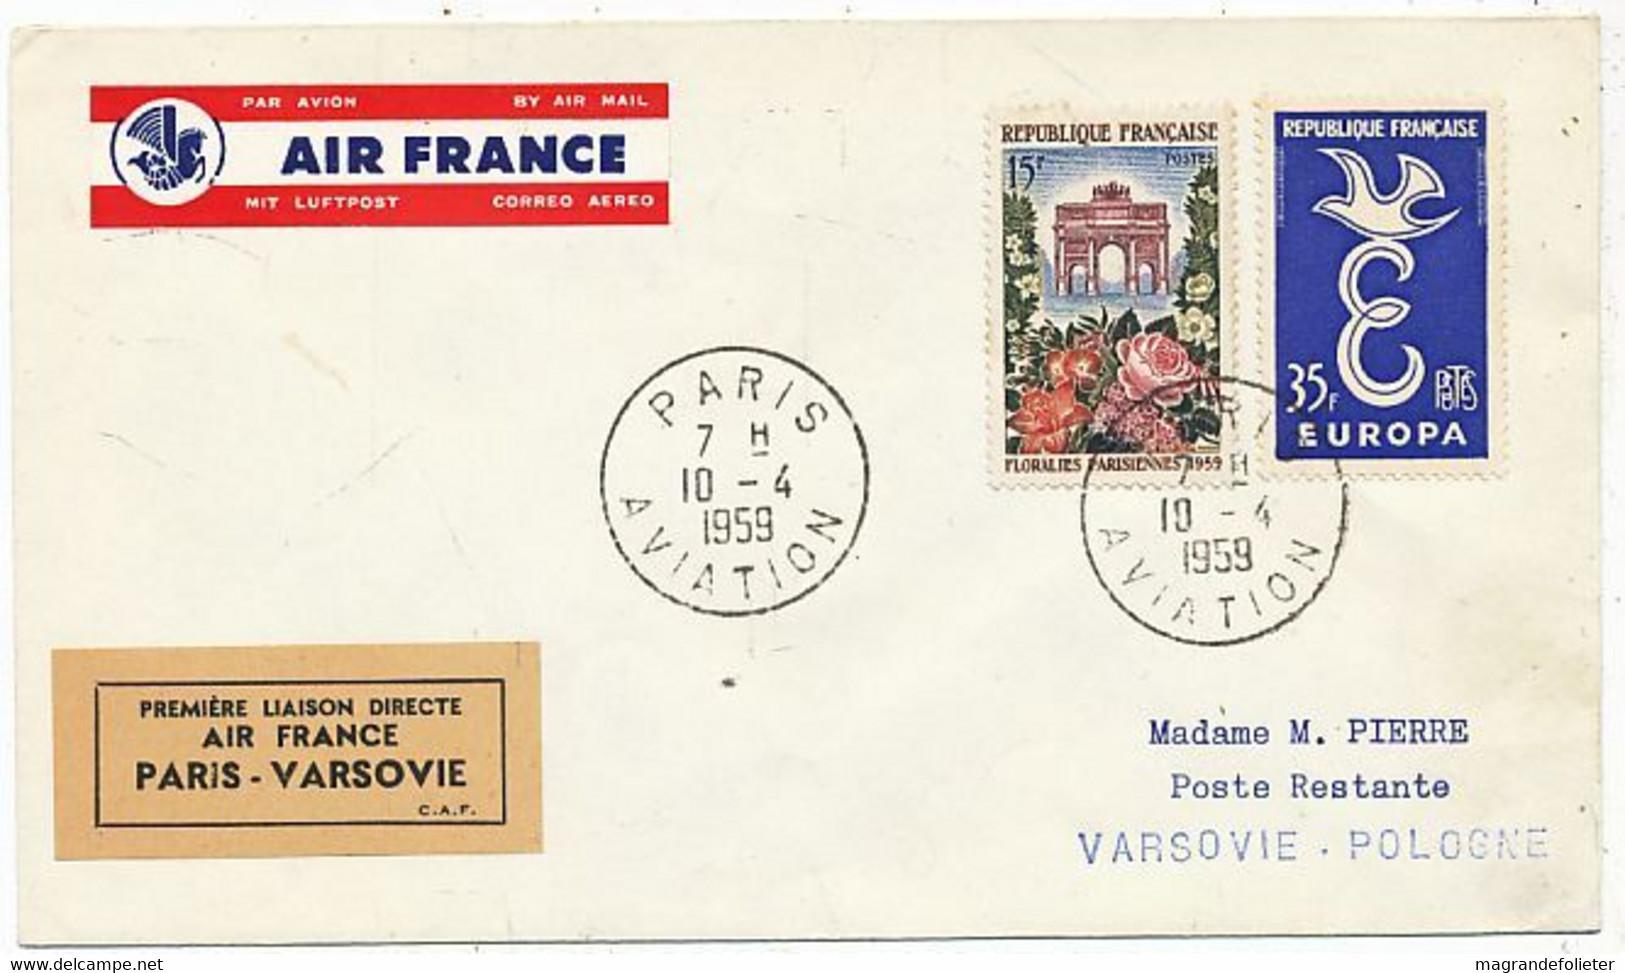 AVION AVIATION AIRLINE AIR FRANCE PREMIERE VOL DIRECT PARIS-VARSOVIE 1959 - Certificados De Vuelo